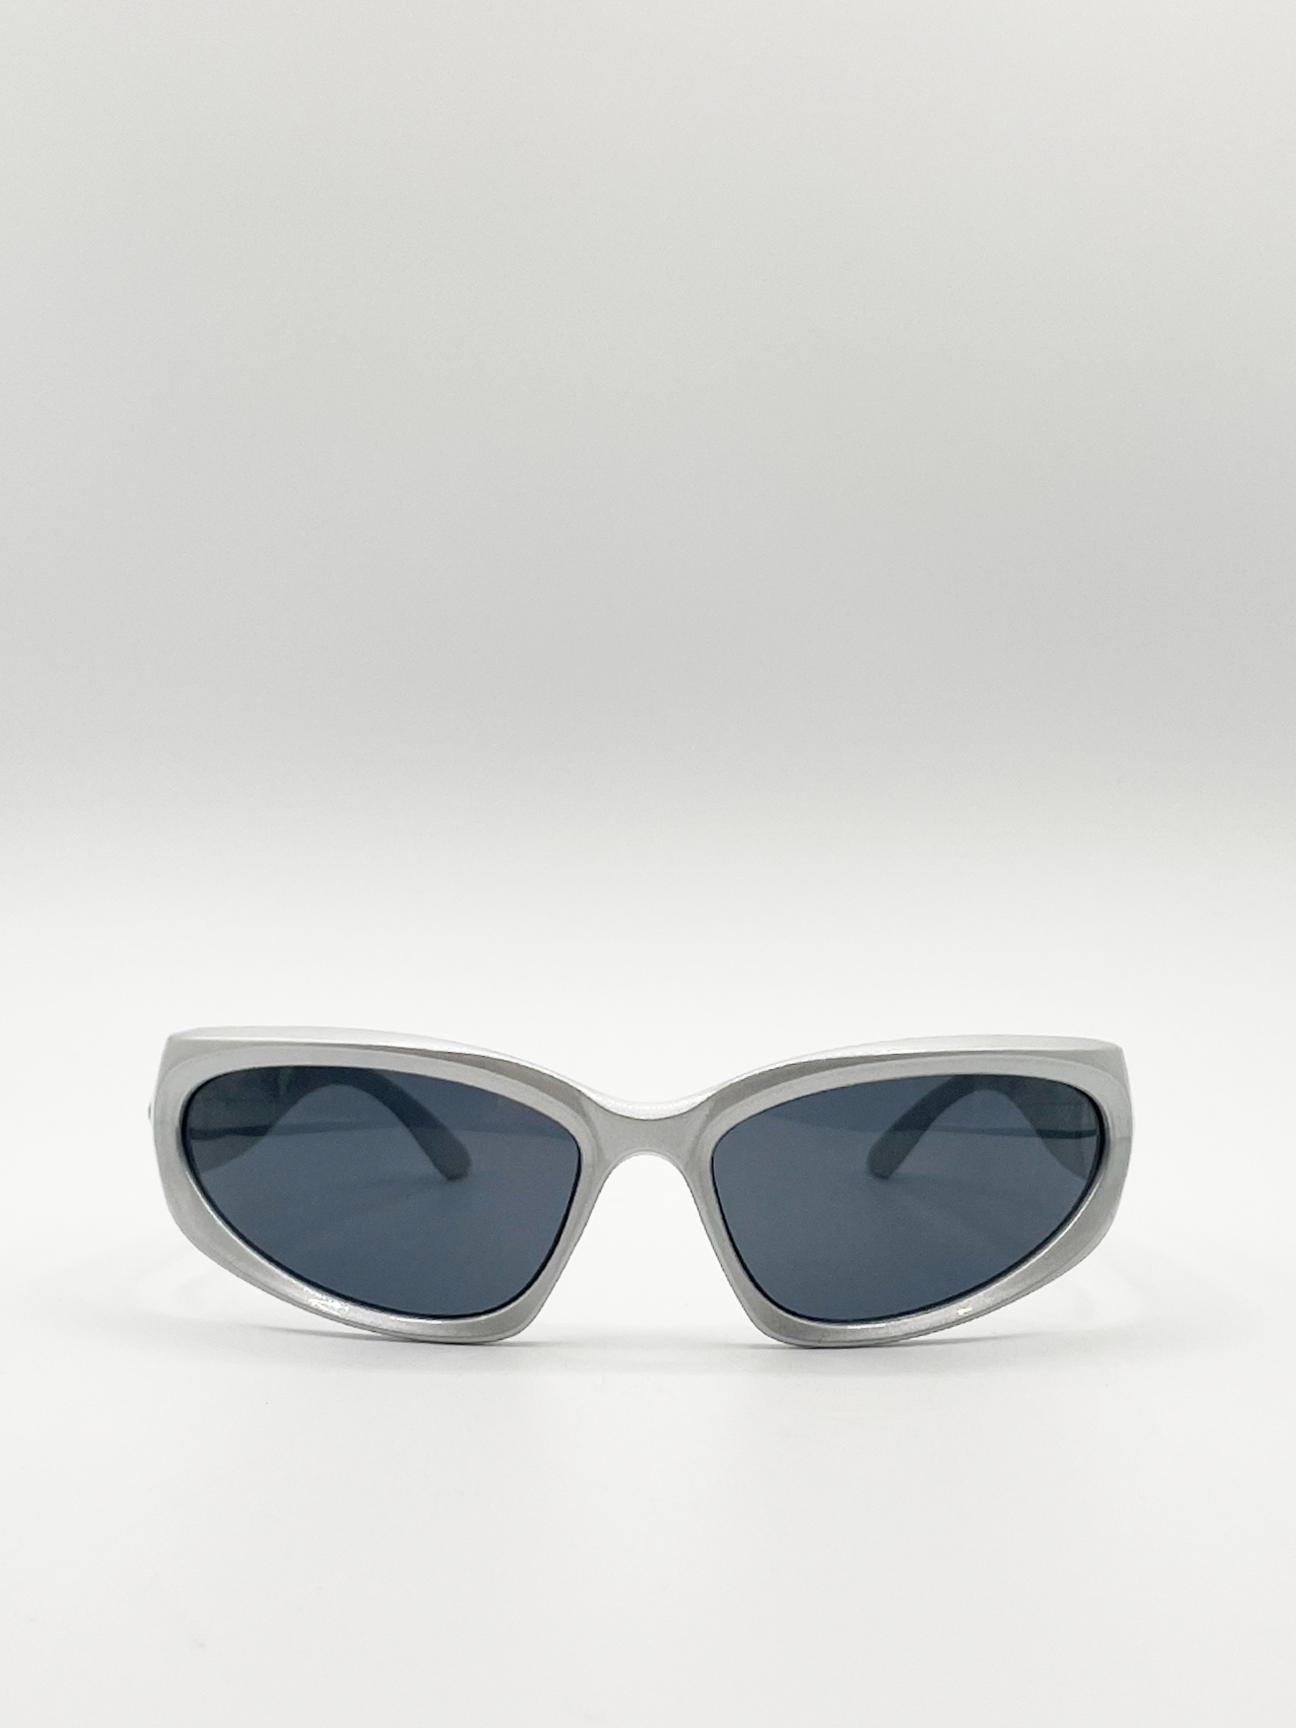 Silver Racer Style Plastic Frame Sunglasses with Black Lenses